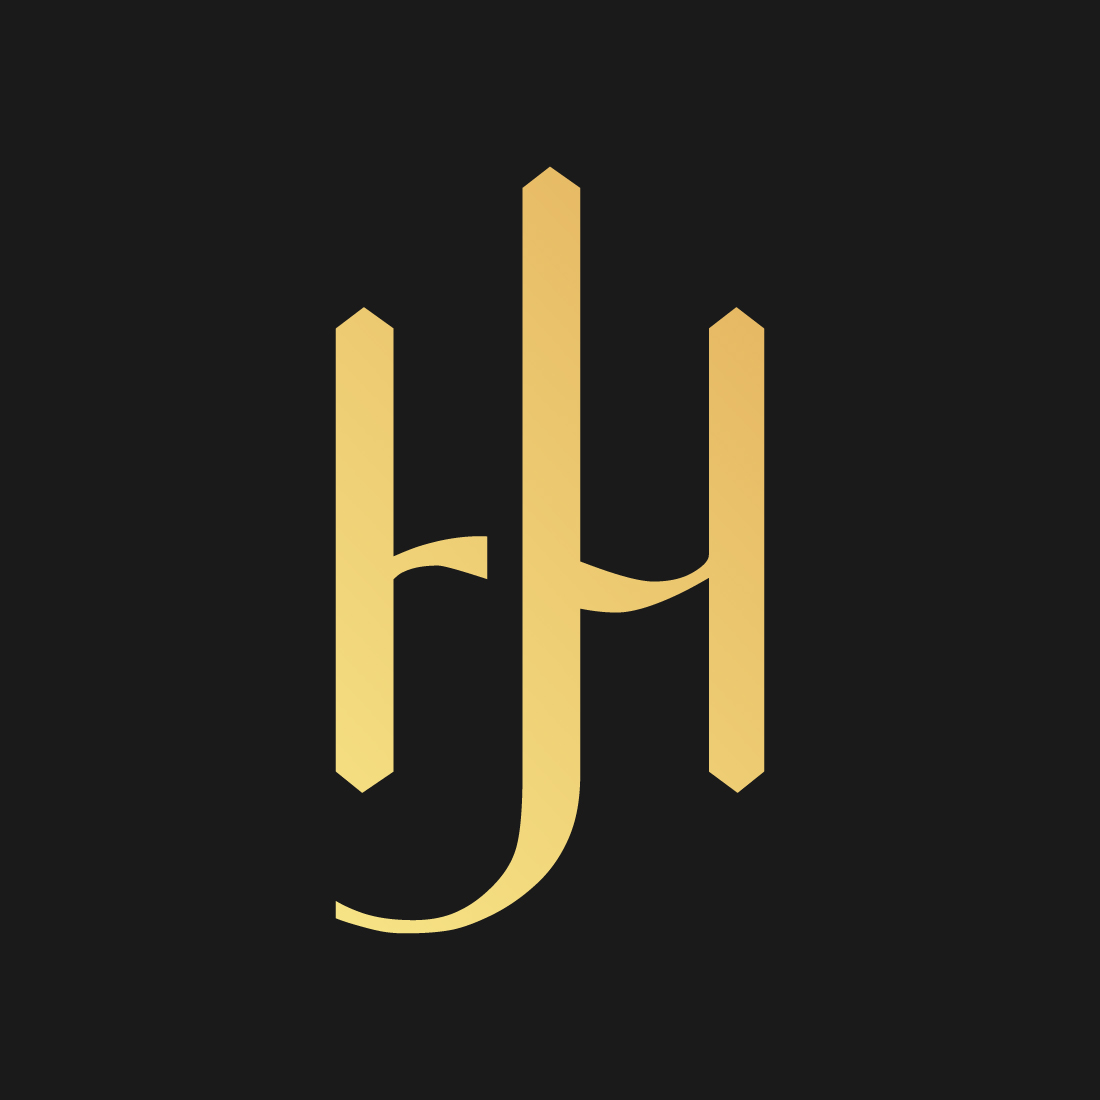 HJ logo design preview image.